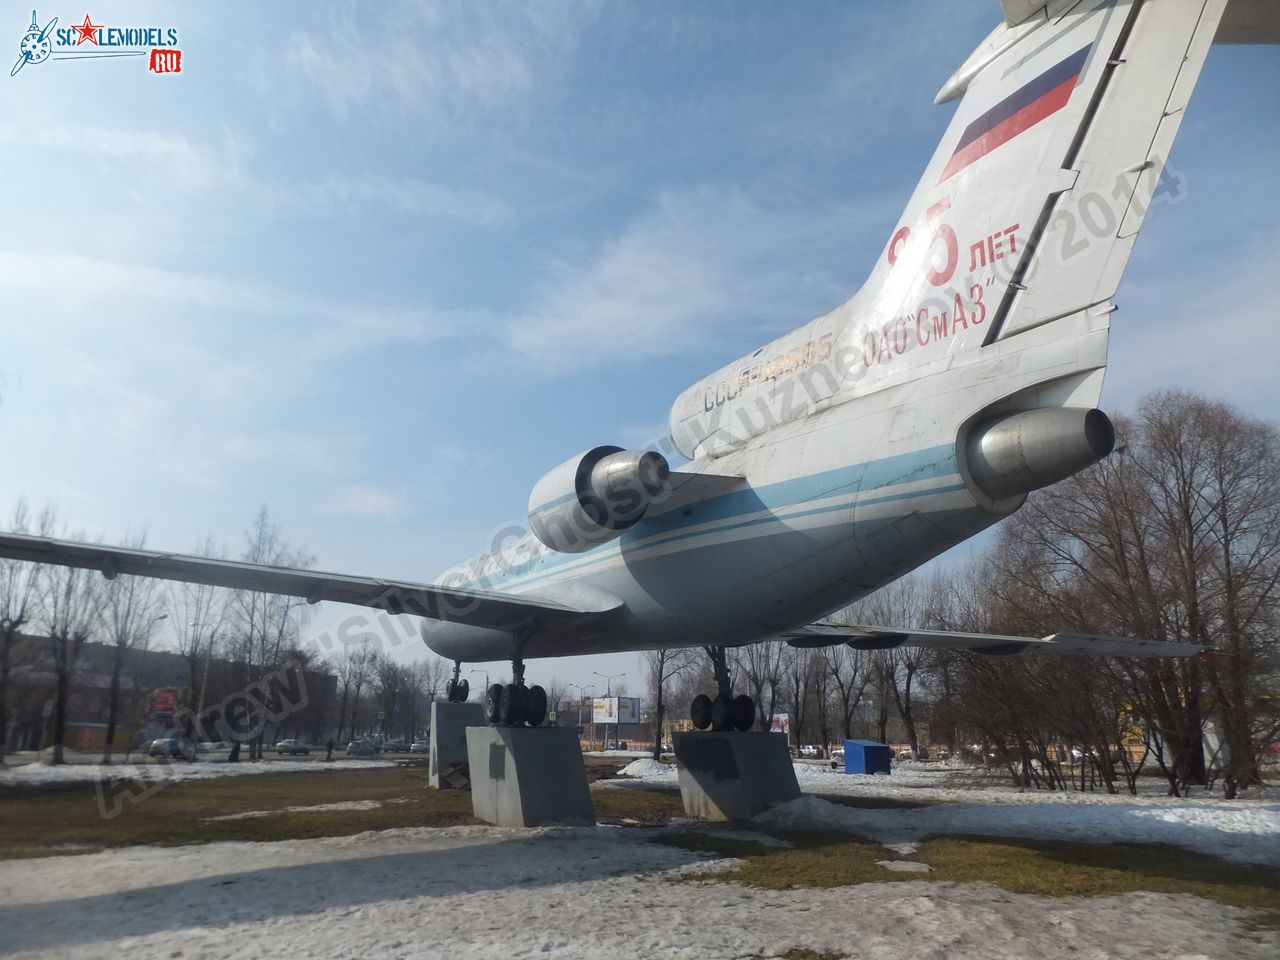 Yak-42_USSR-10985_0003.jpg